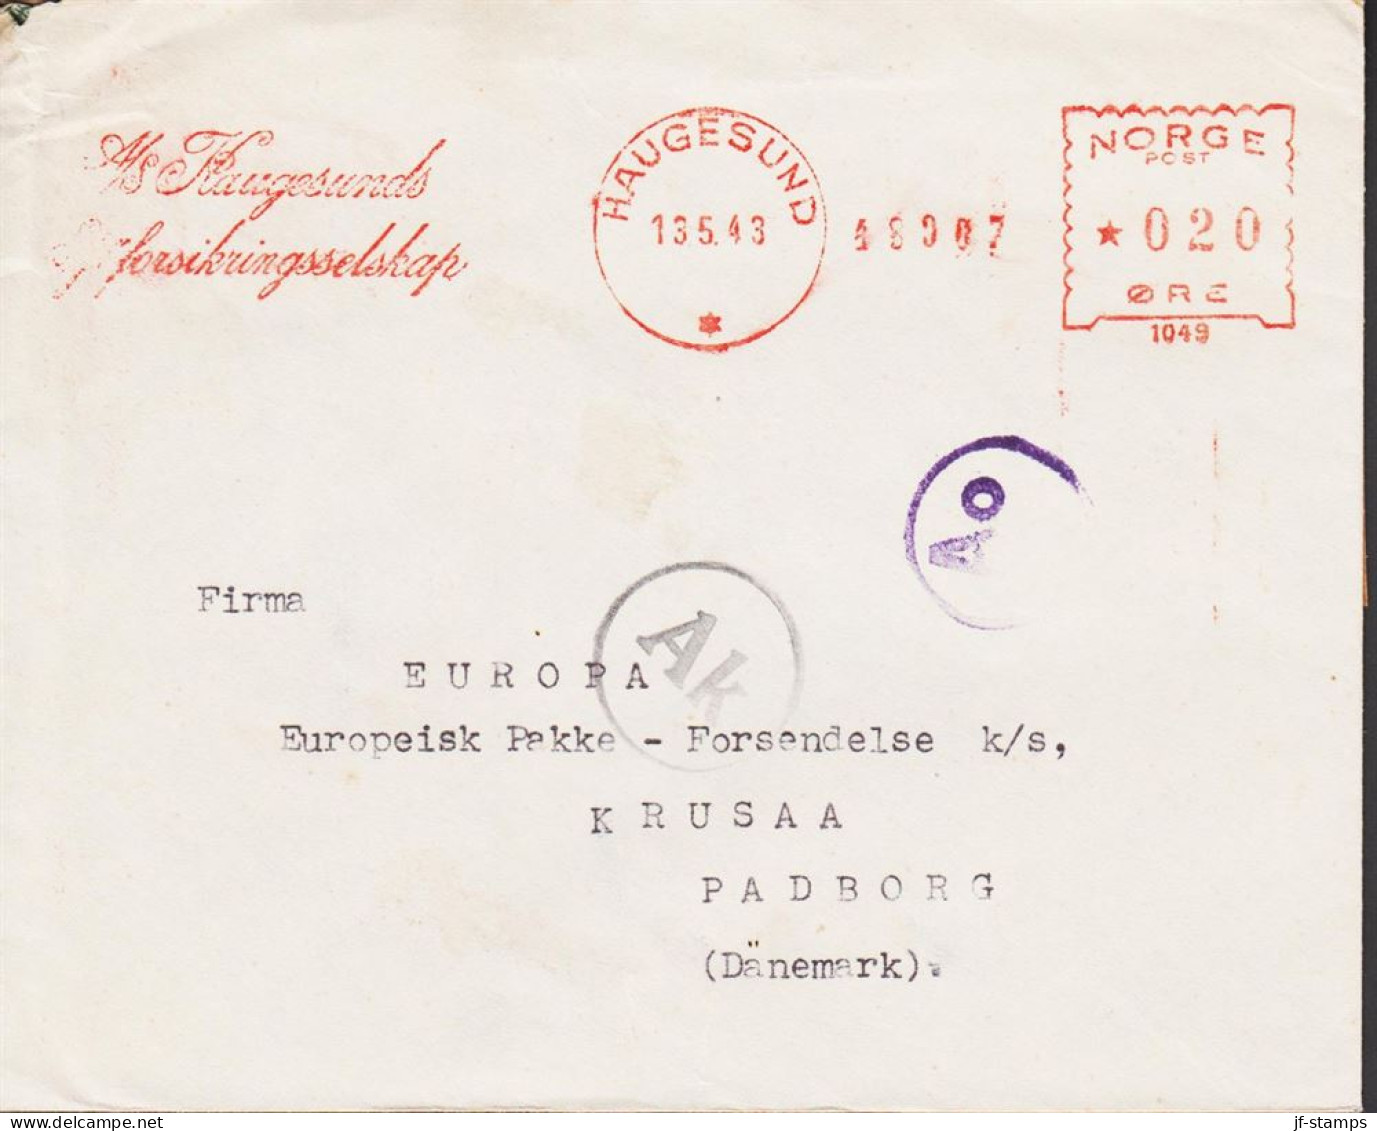 1943. NORGE. Very Interesting Cover To Firma EUROPA Europæisk Pakke Forsendelse, KRUSAA PADBORG DANMARK Ca... - JF545670 - Cartas & Documentos